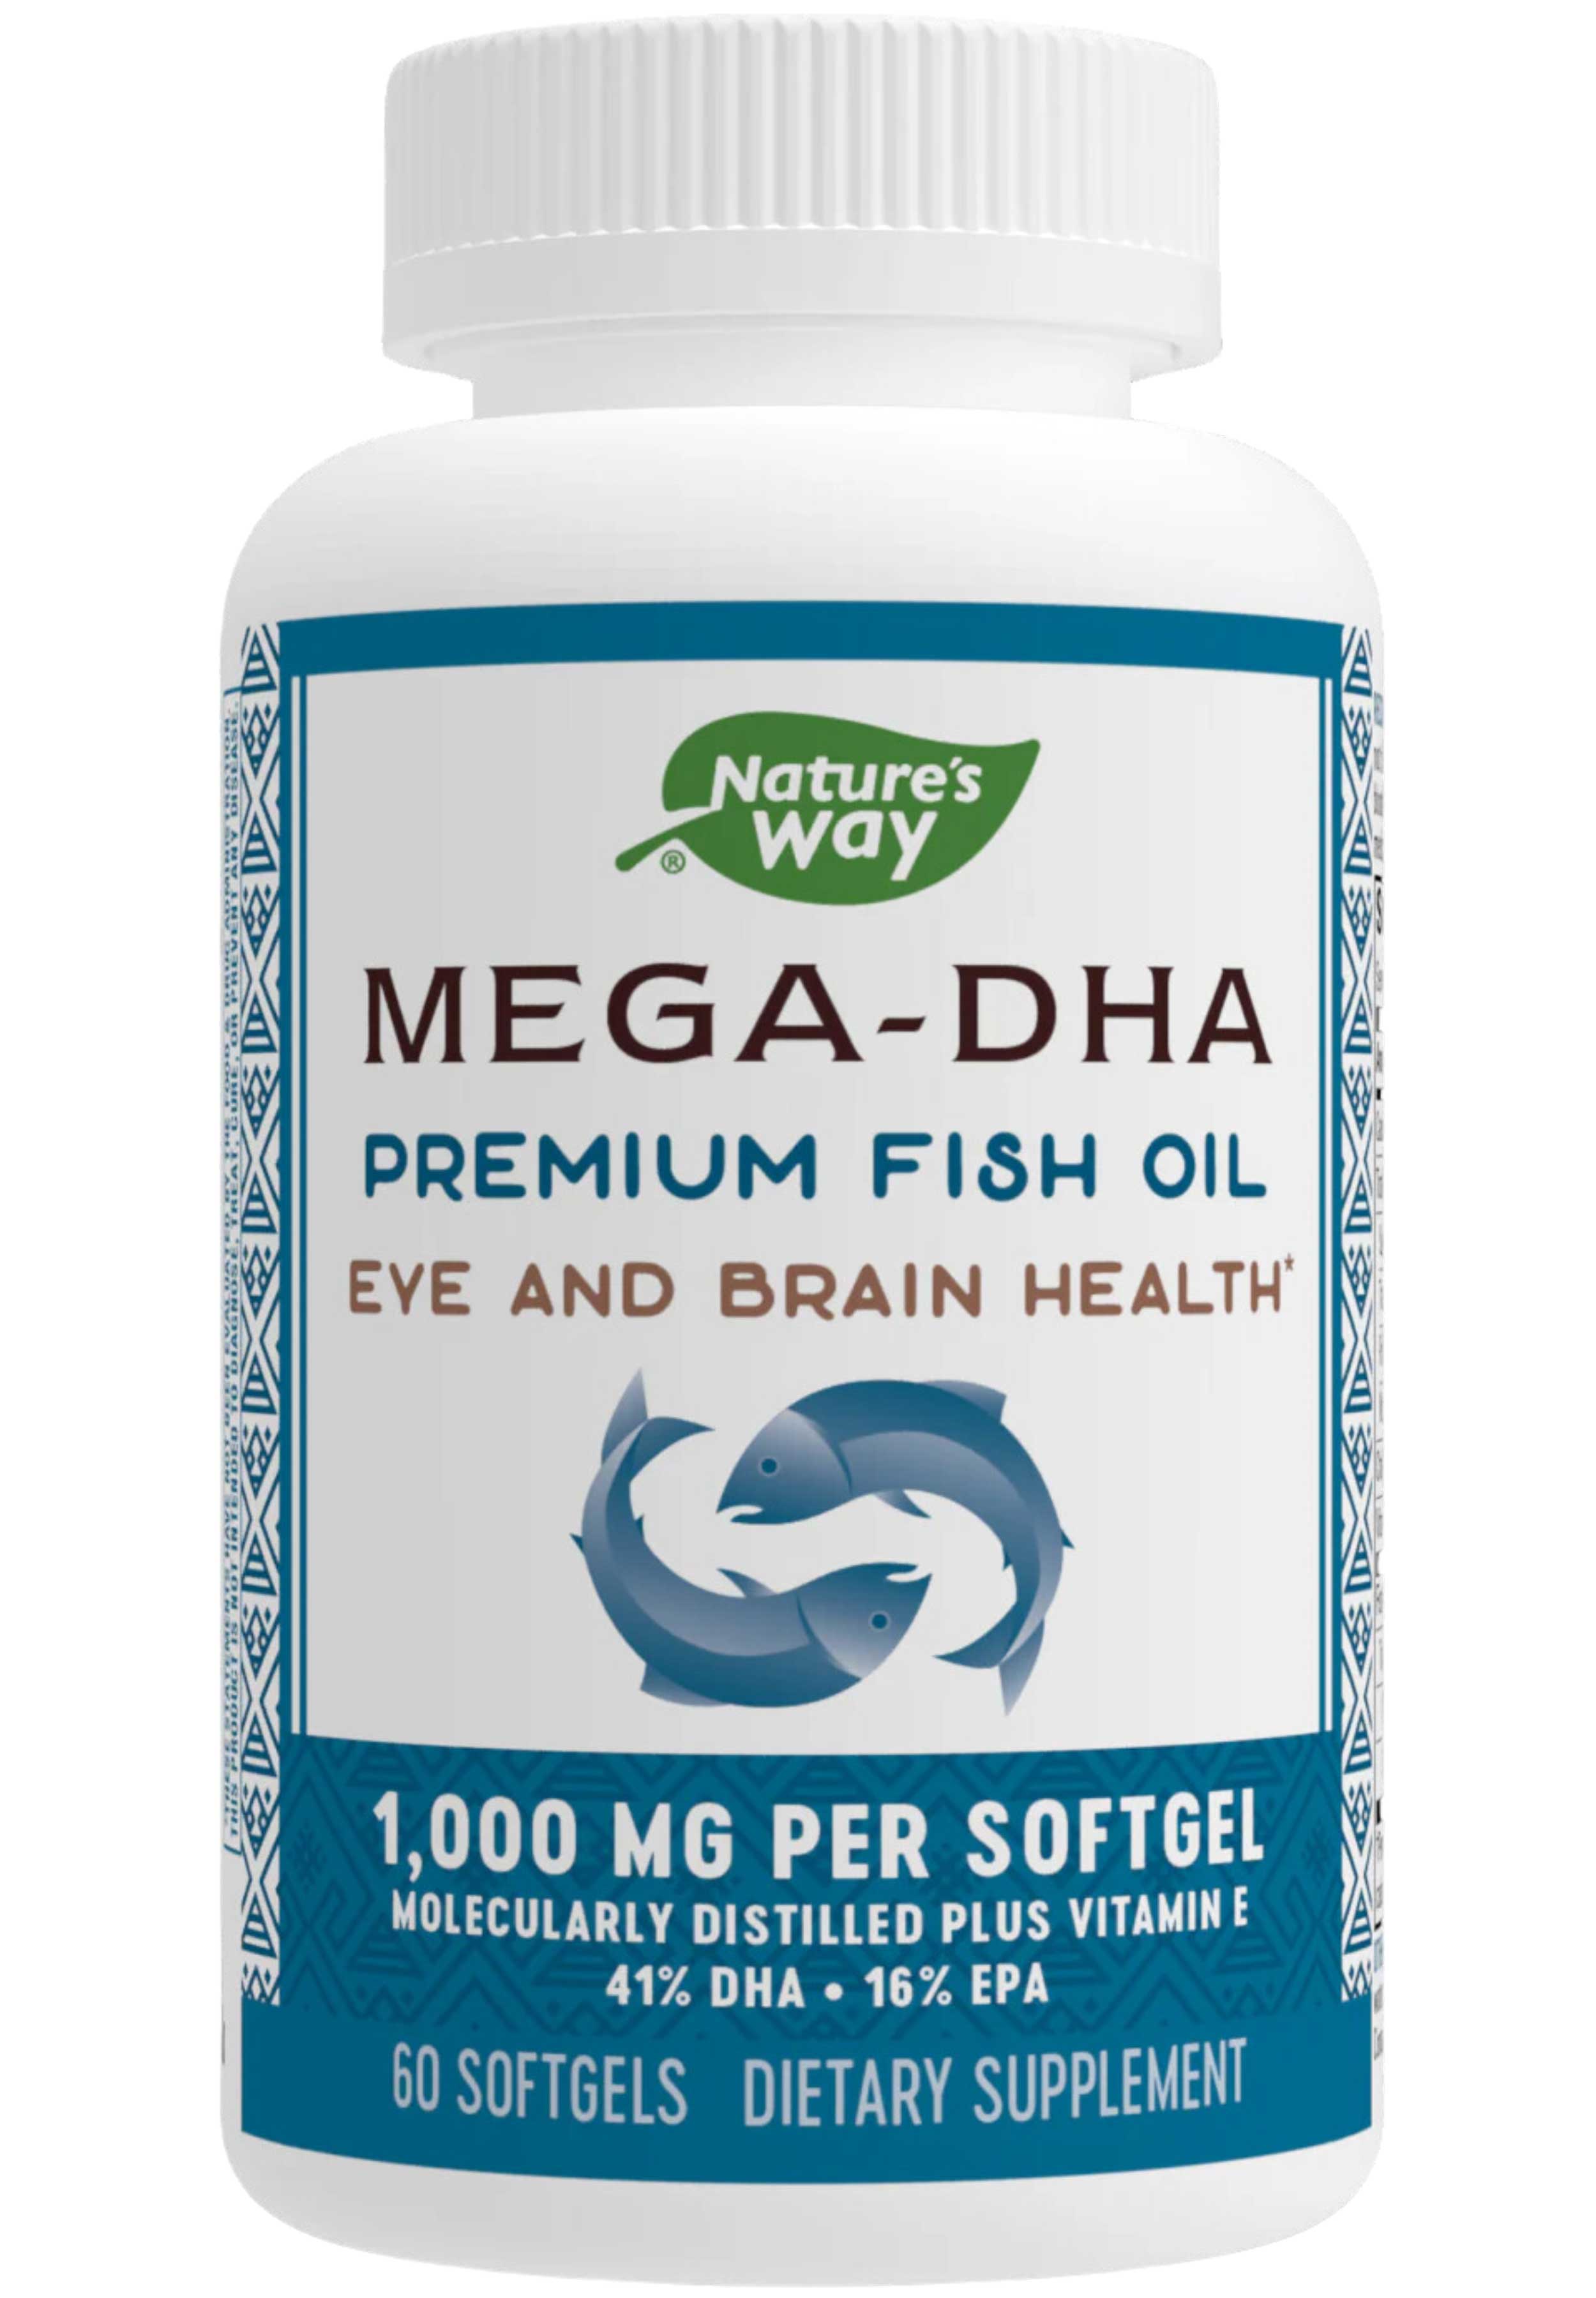 Nature's Way Mega-DHA Premium Fish Oil (Formerly EfaGold Mega-DHA)